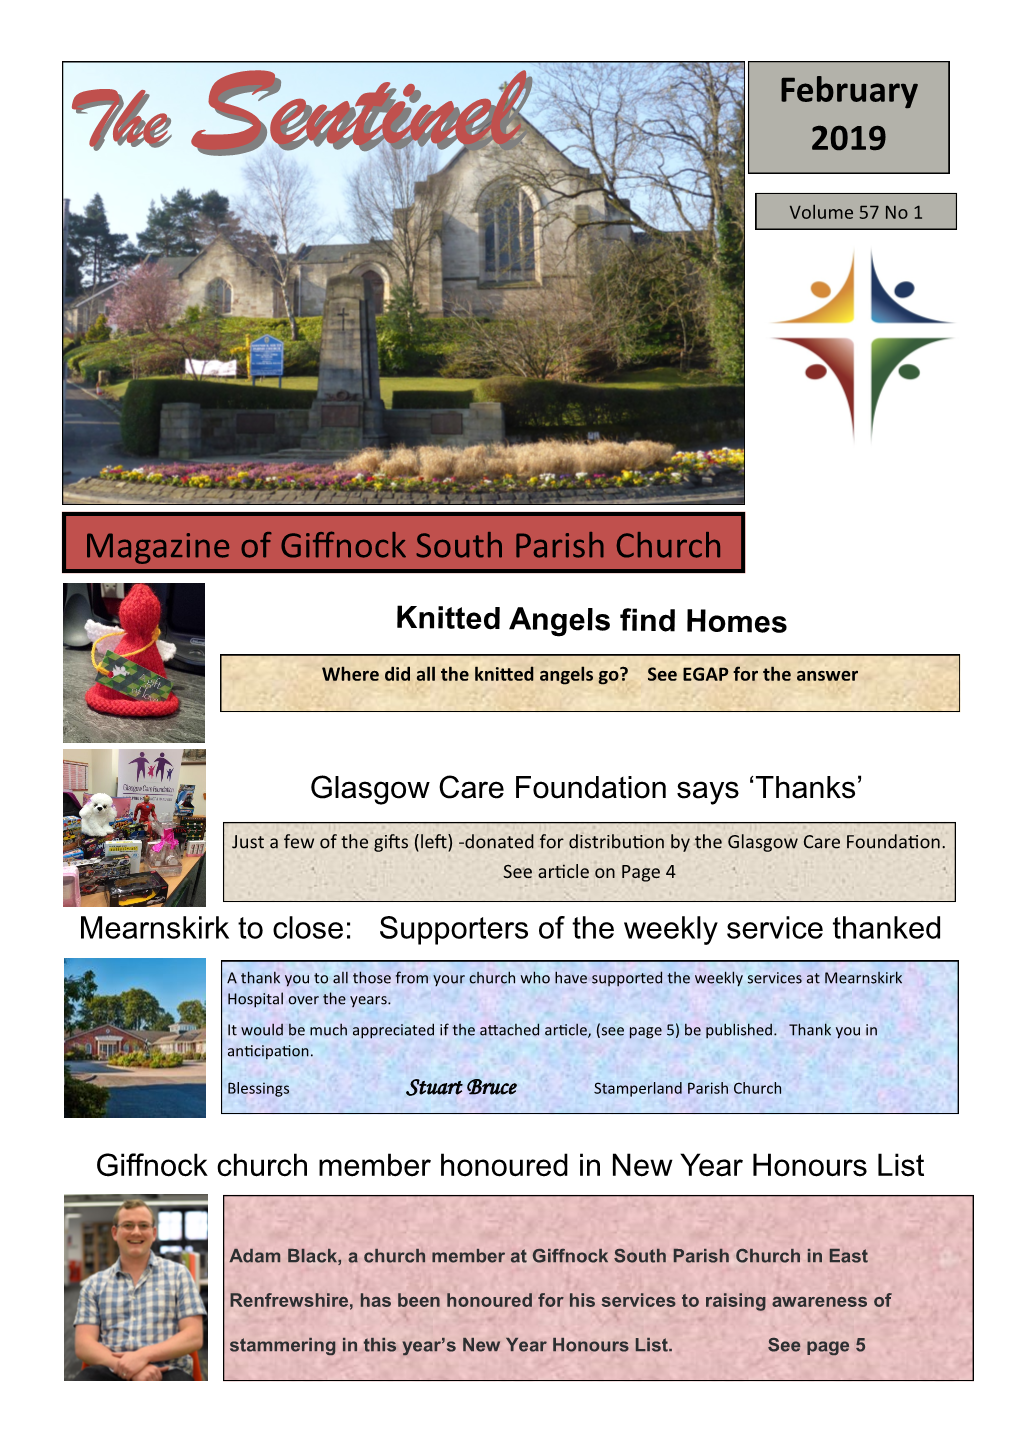 February 2019 Magazine of Giffnock South Parish Church